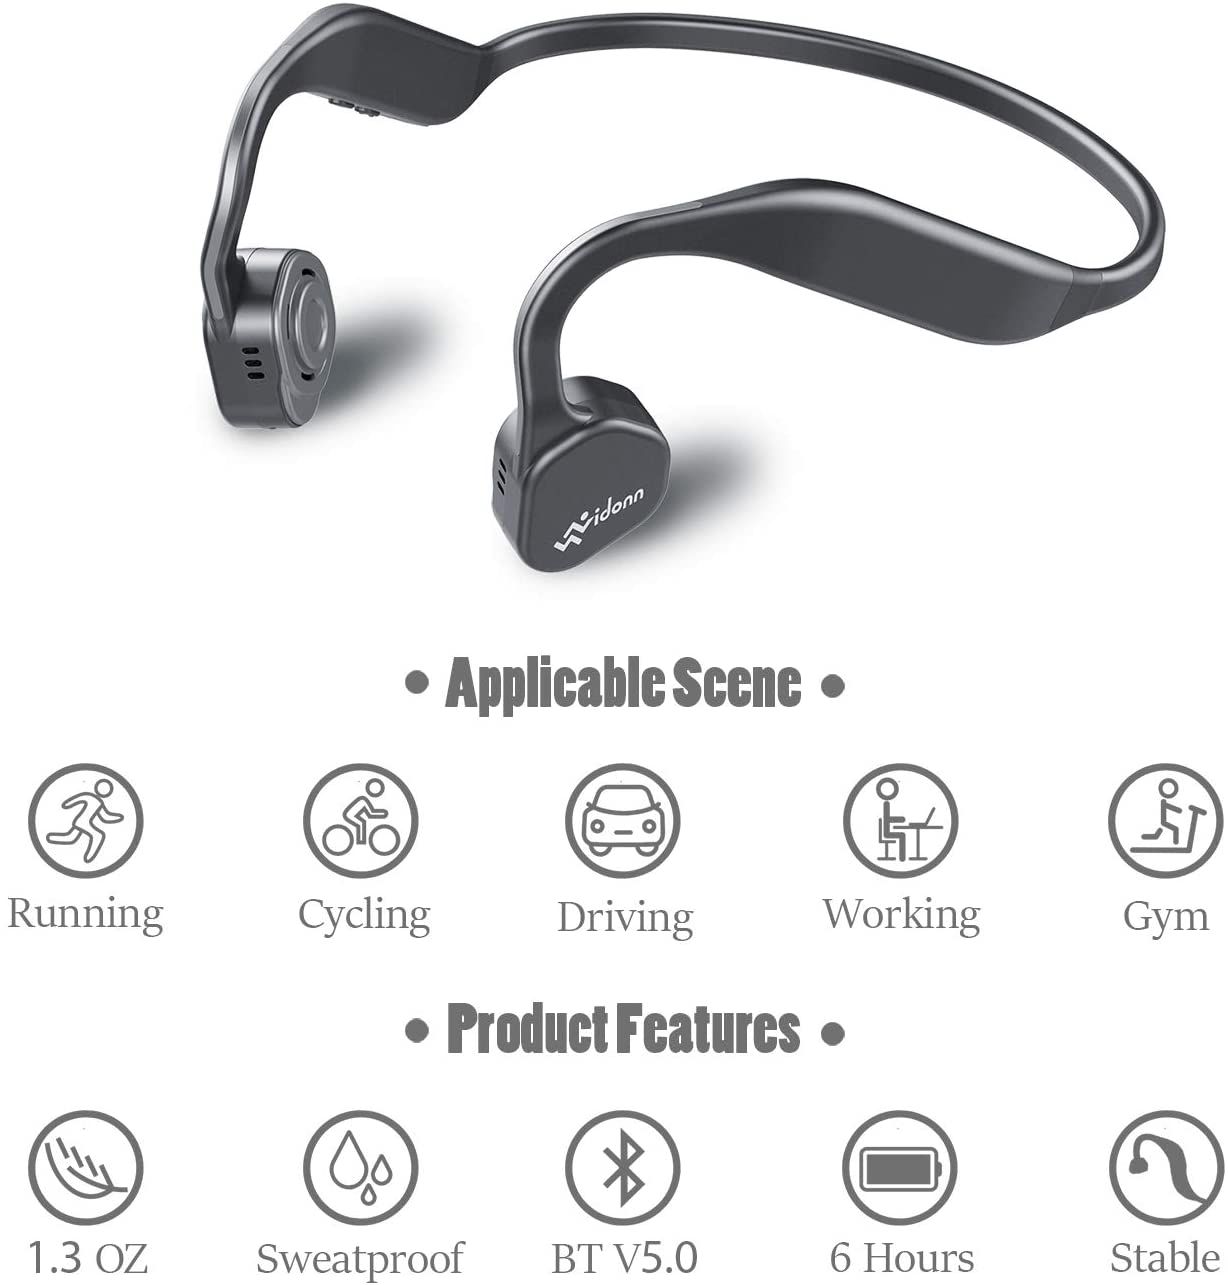 Vidonn F1 Sports Headset features